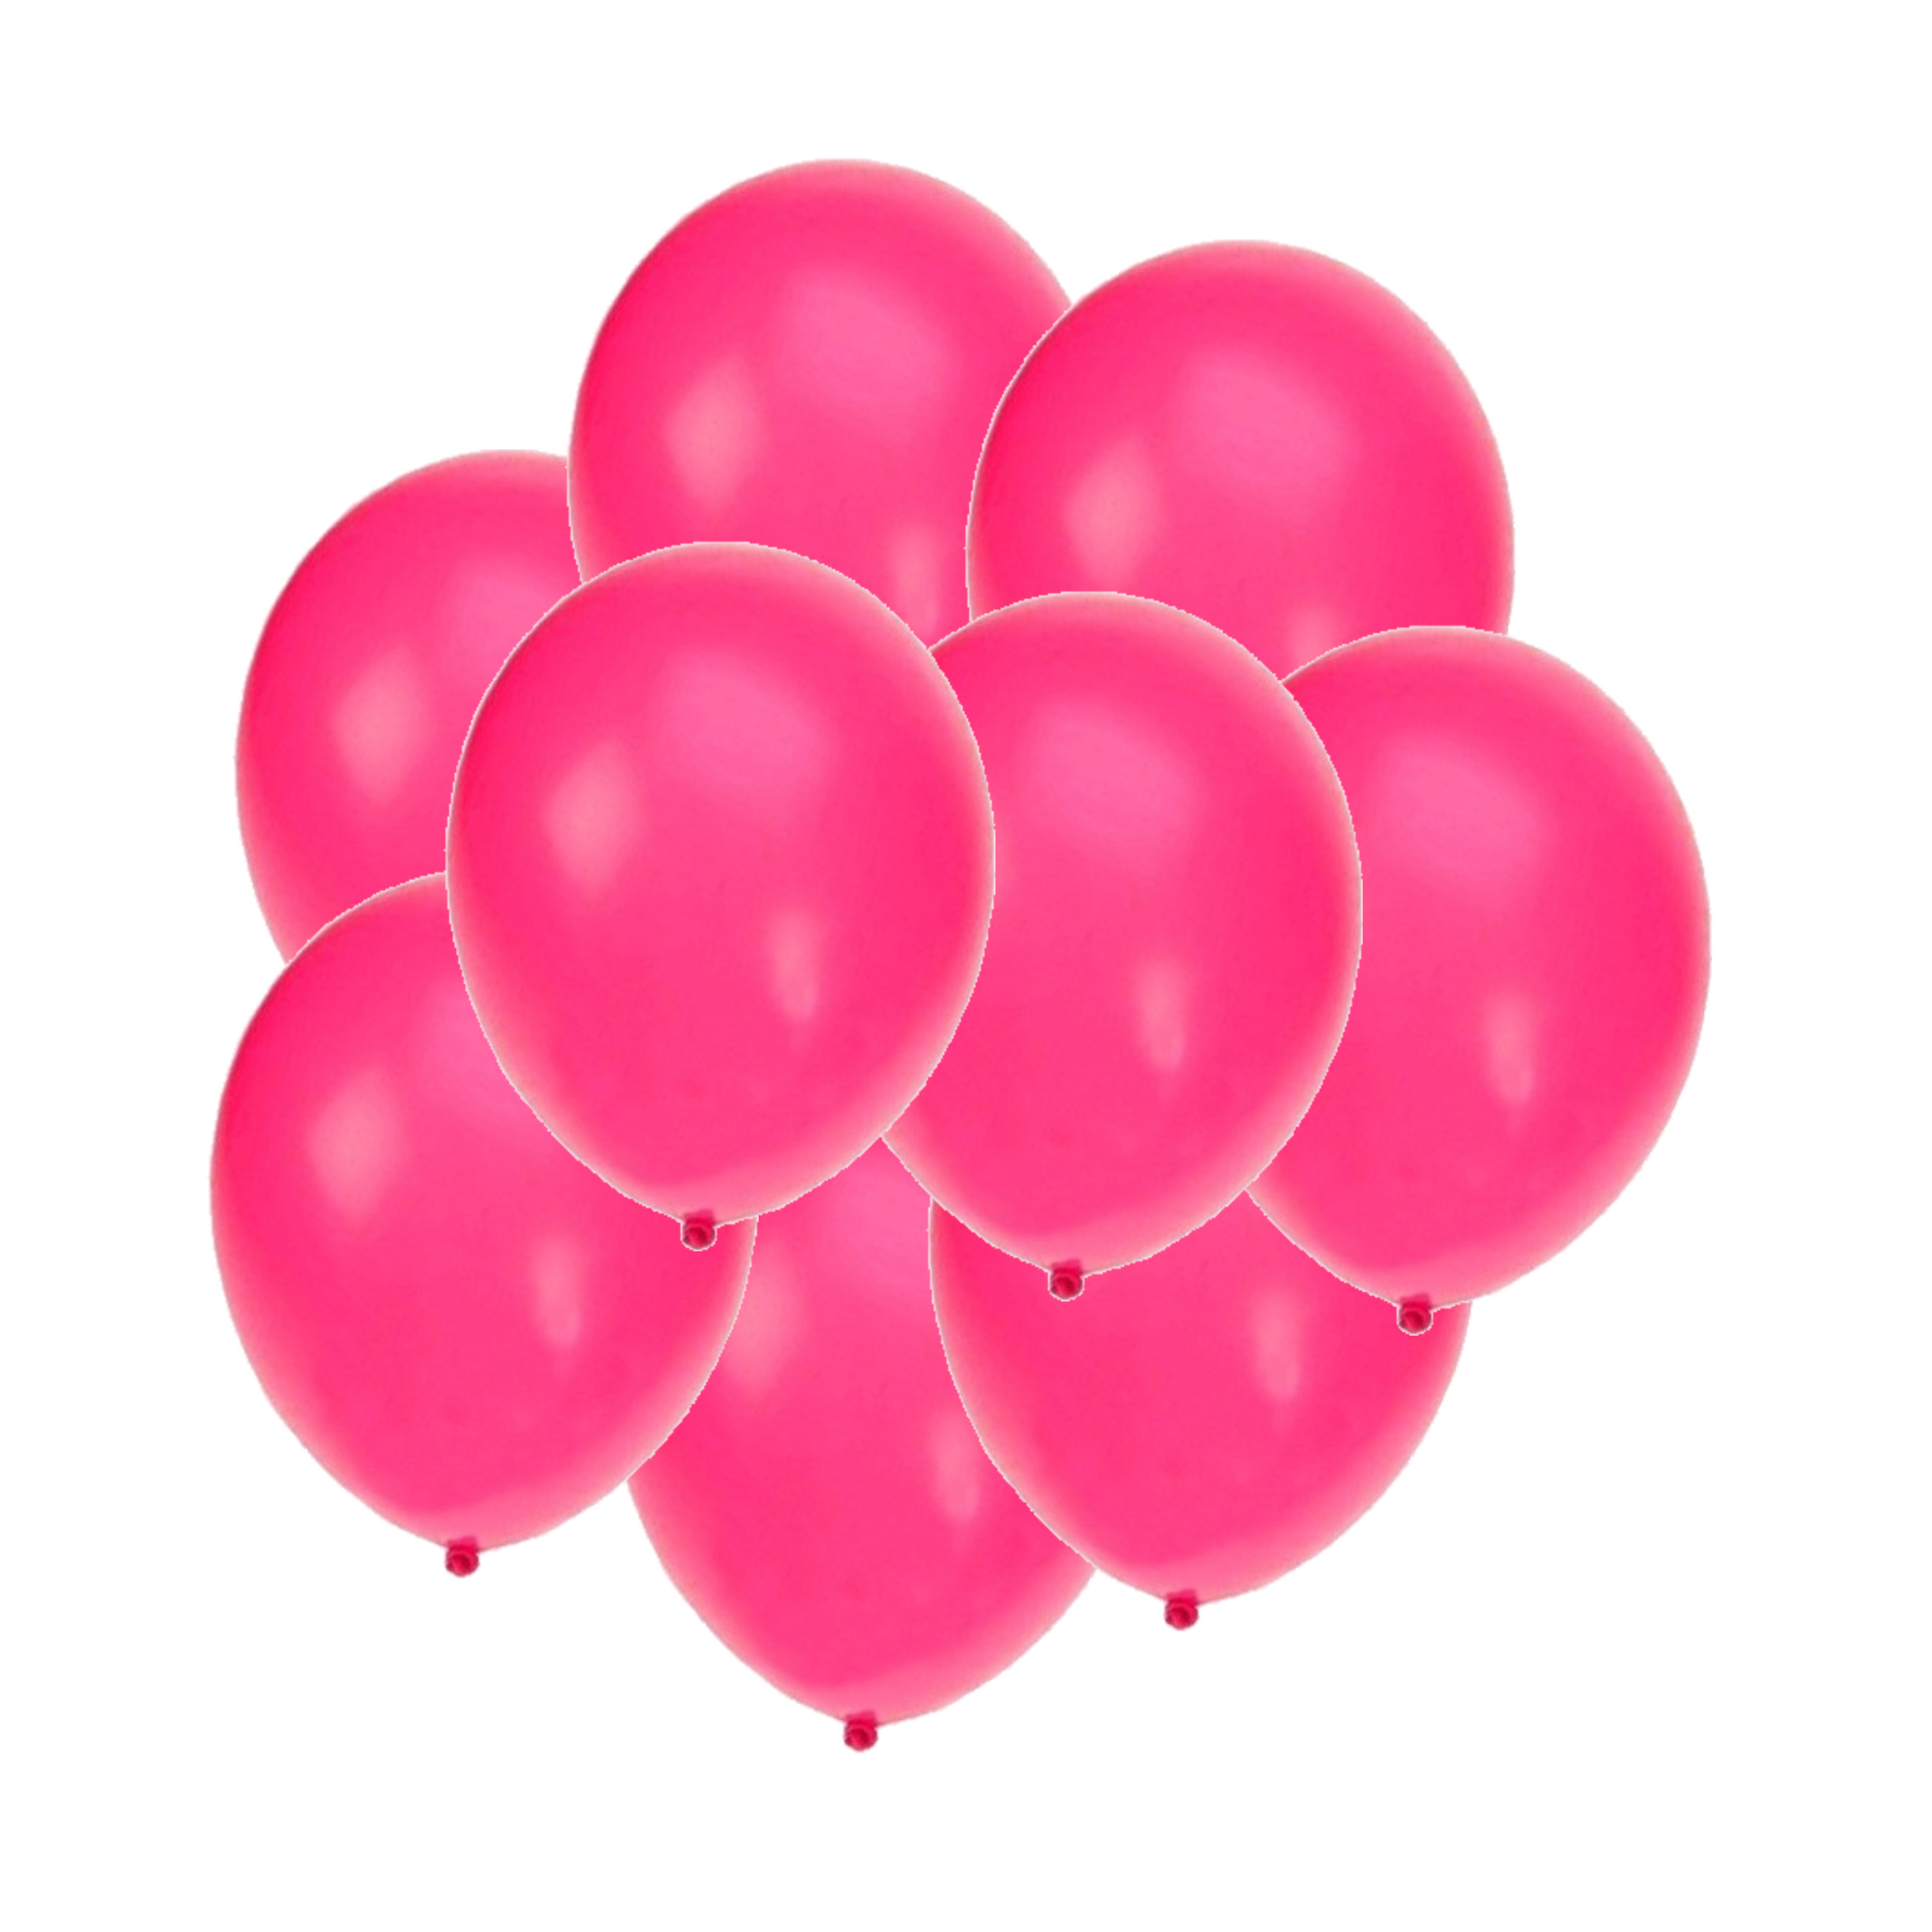 Bellatio decorations - Ballonnen knalroze/felroze 25x stuks rond 27 cm -